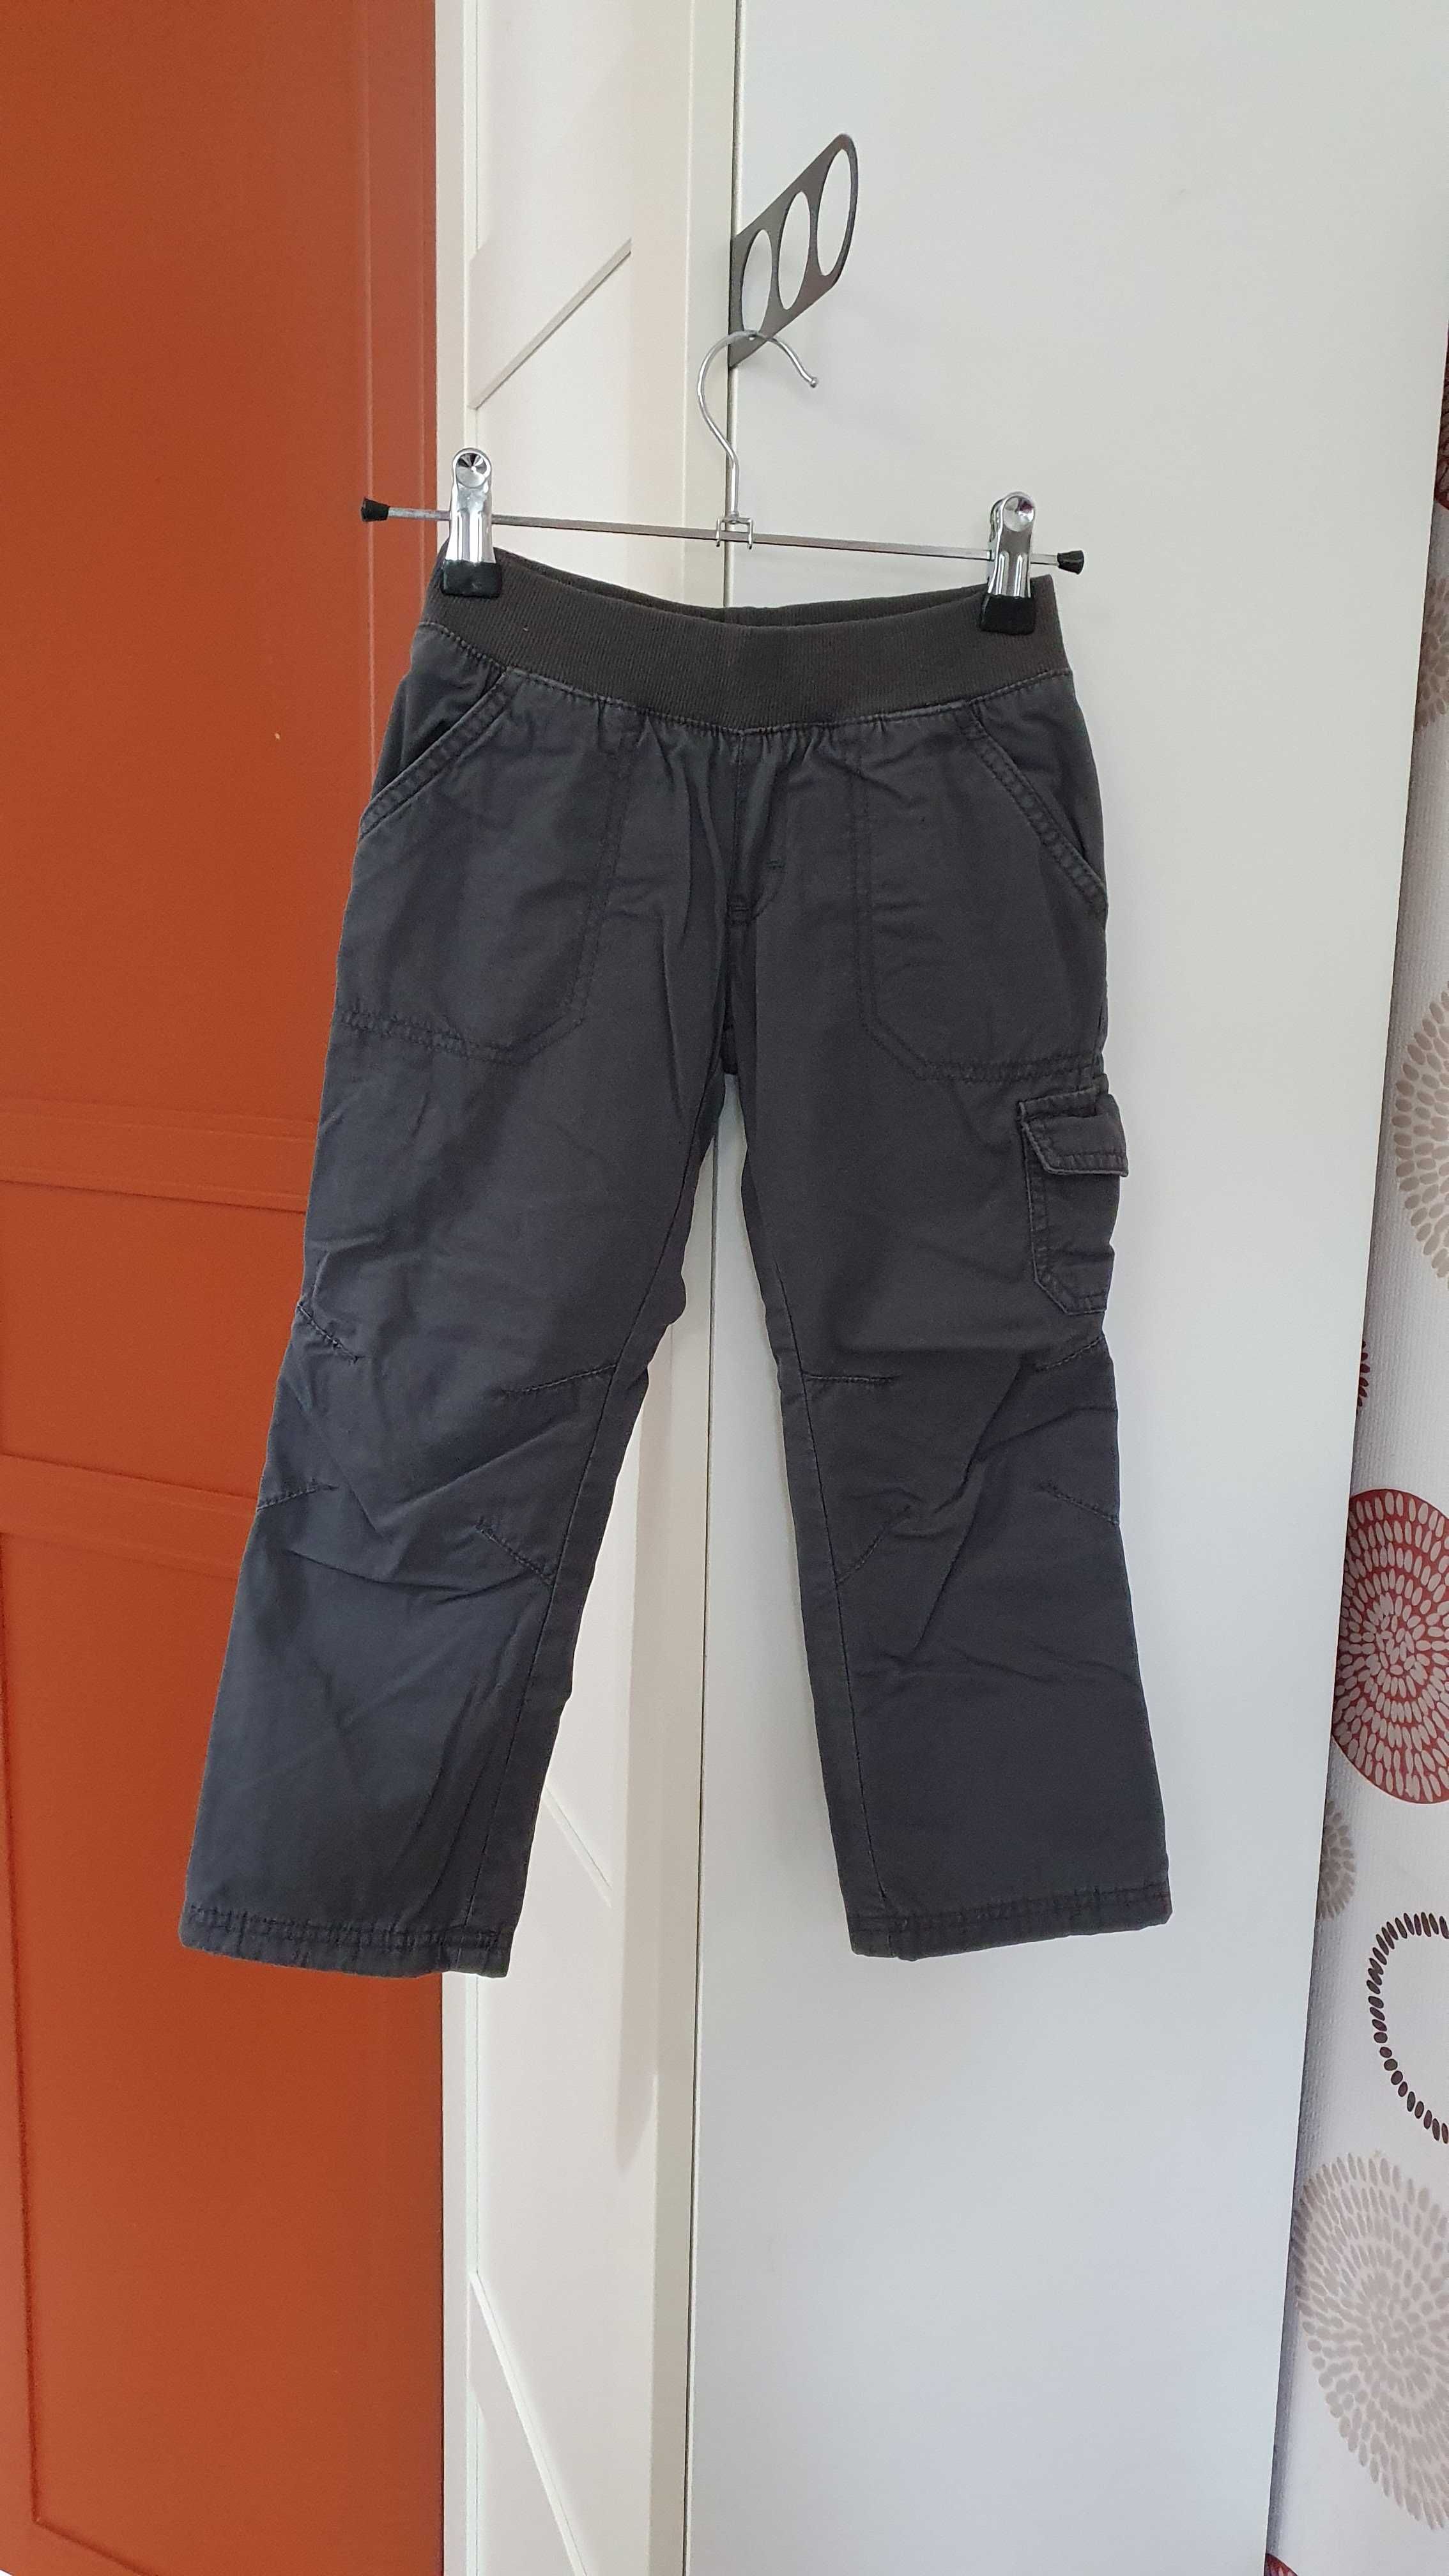 Теплые плотные штаны джинсы outventure для мальчика. размер 104